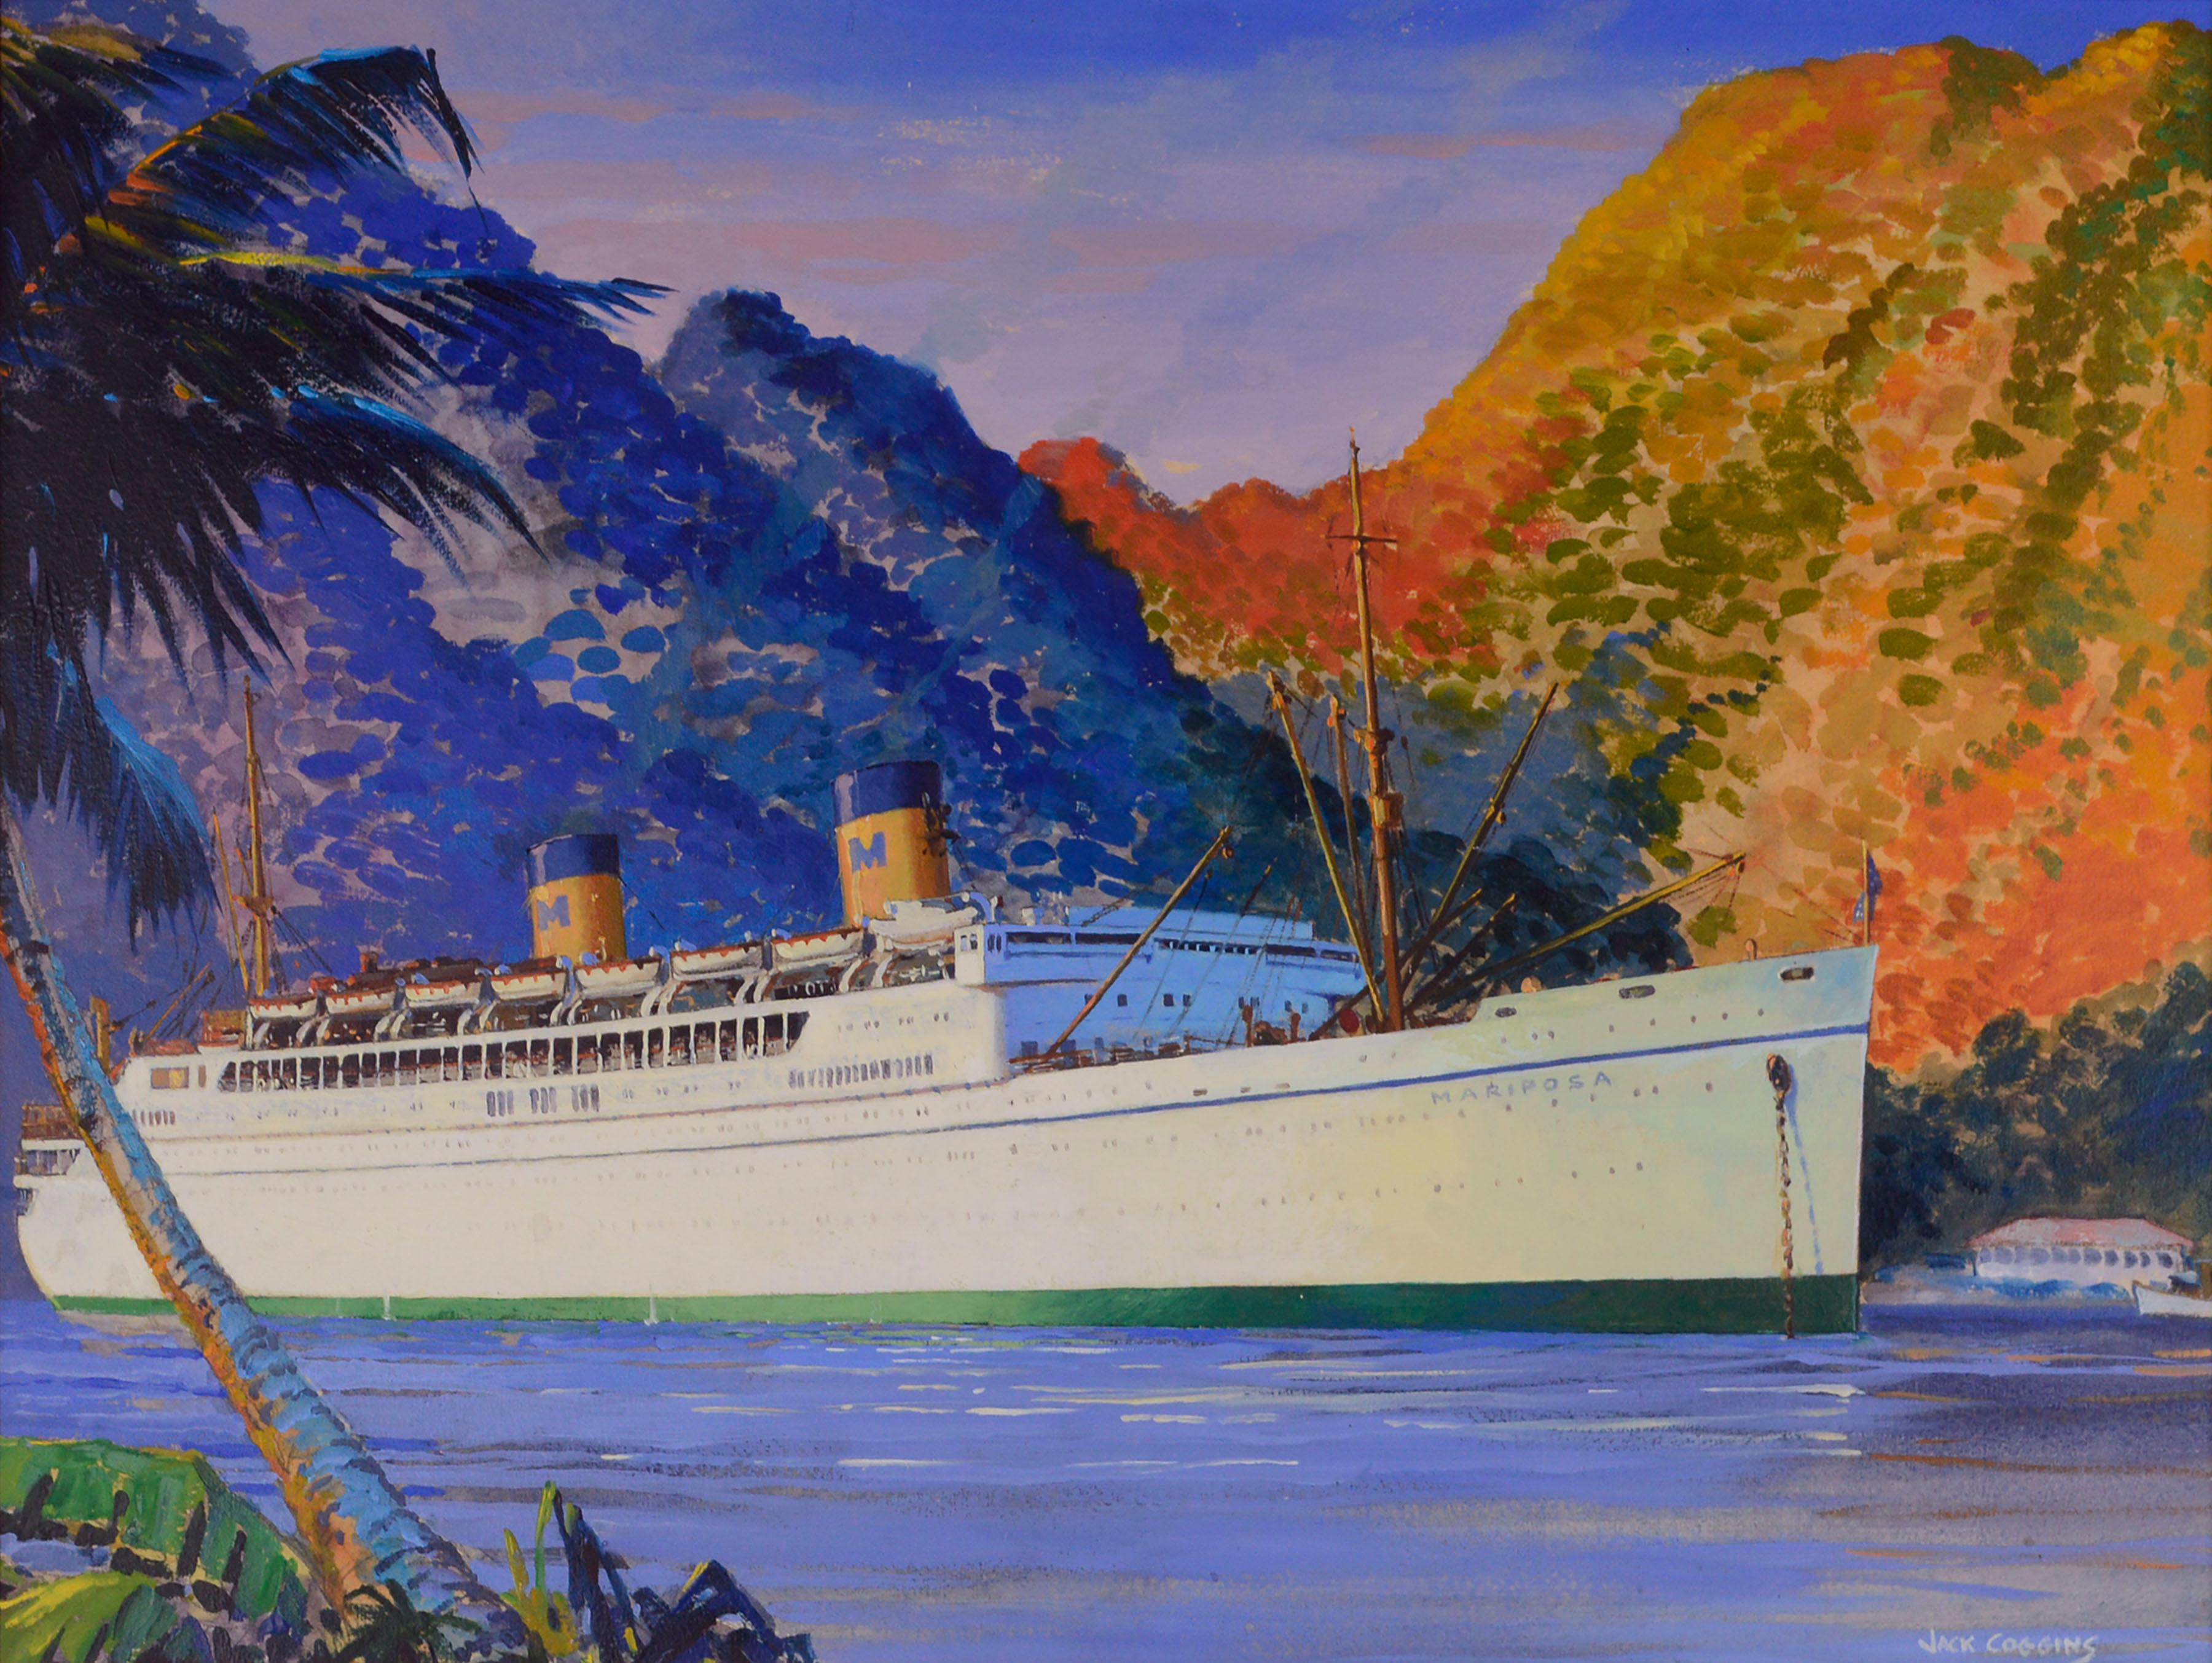 S.S. Mariposa, Matson Steamship - Historical Maritime Seascape Illustration - Painting by Jack Banham Coggins 